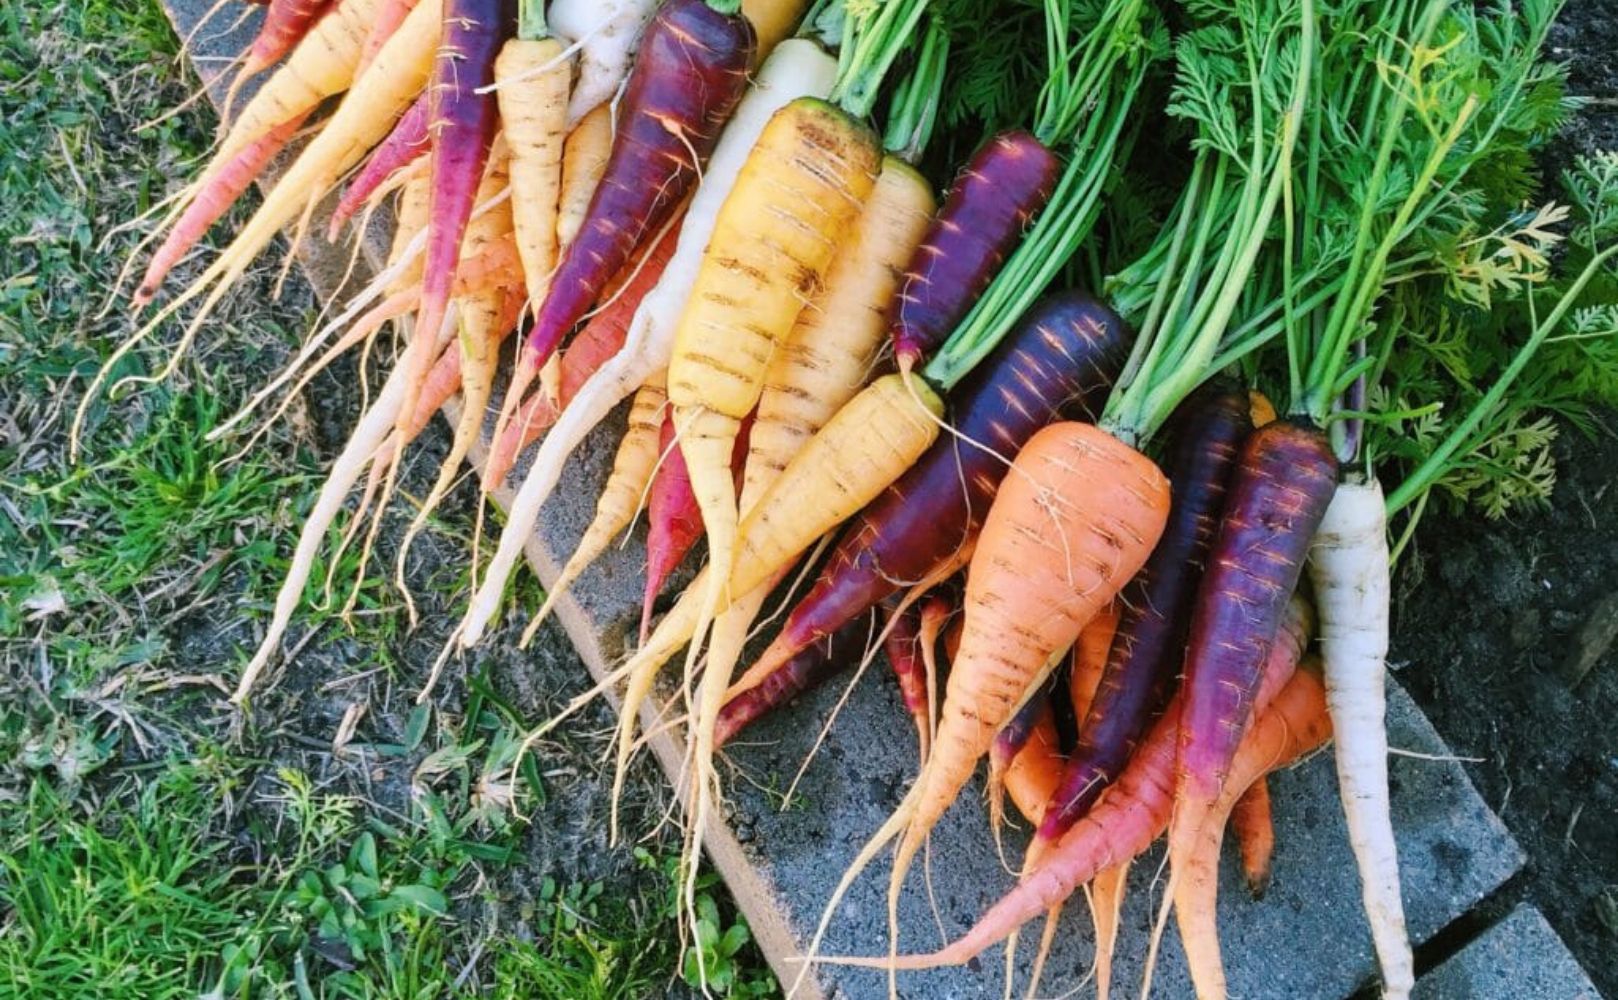 can carrots plant survive austin texas winter weather